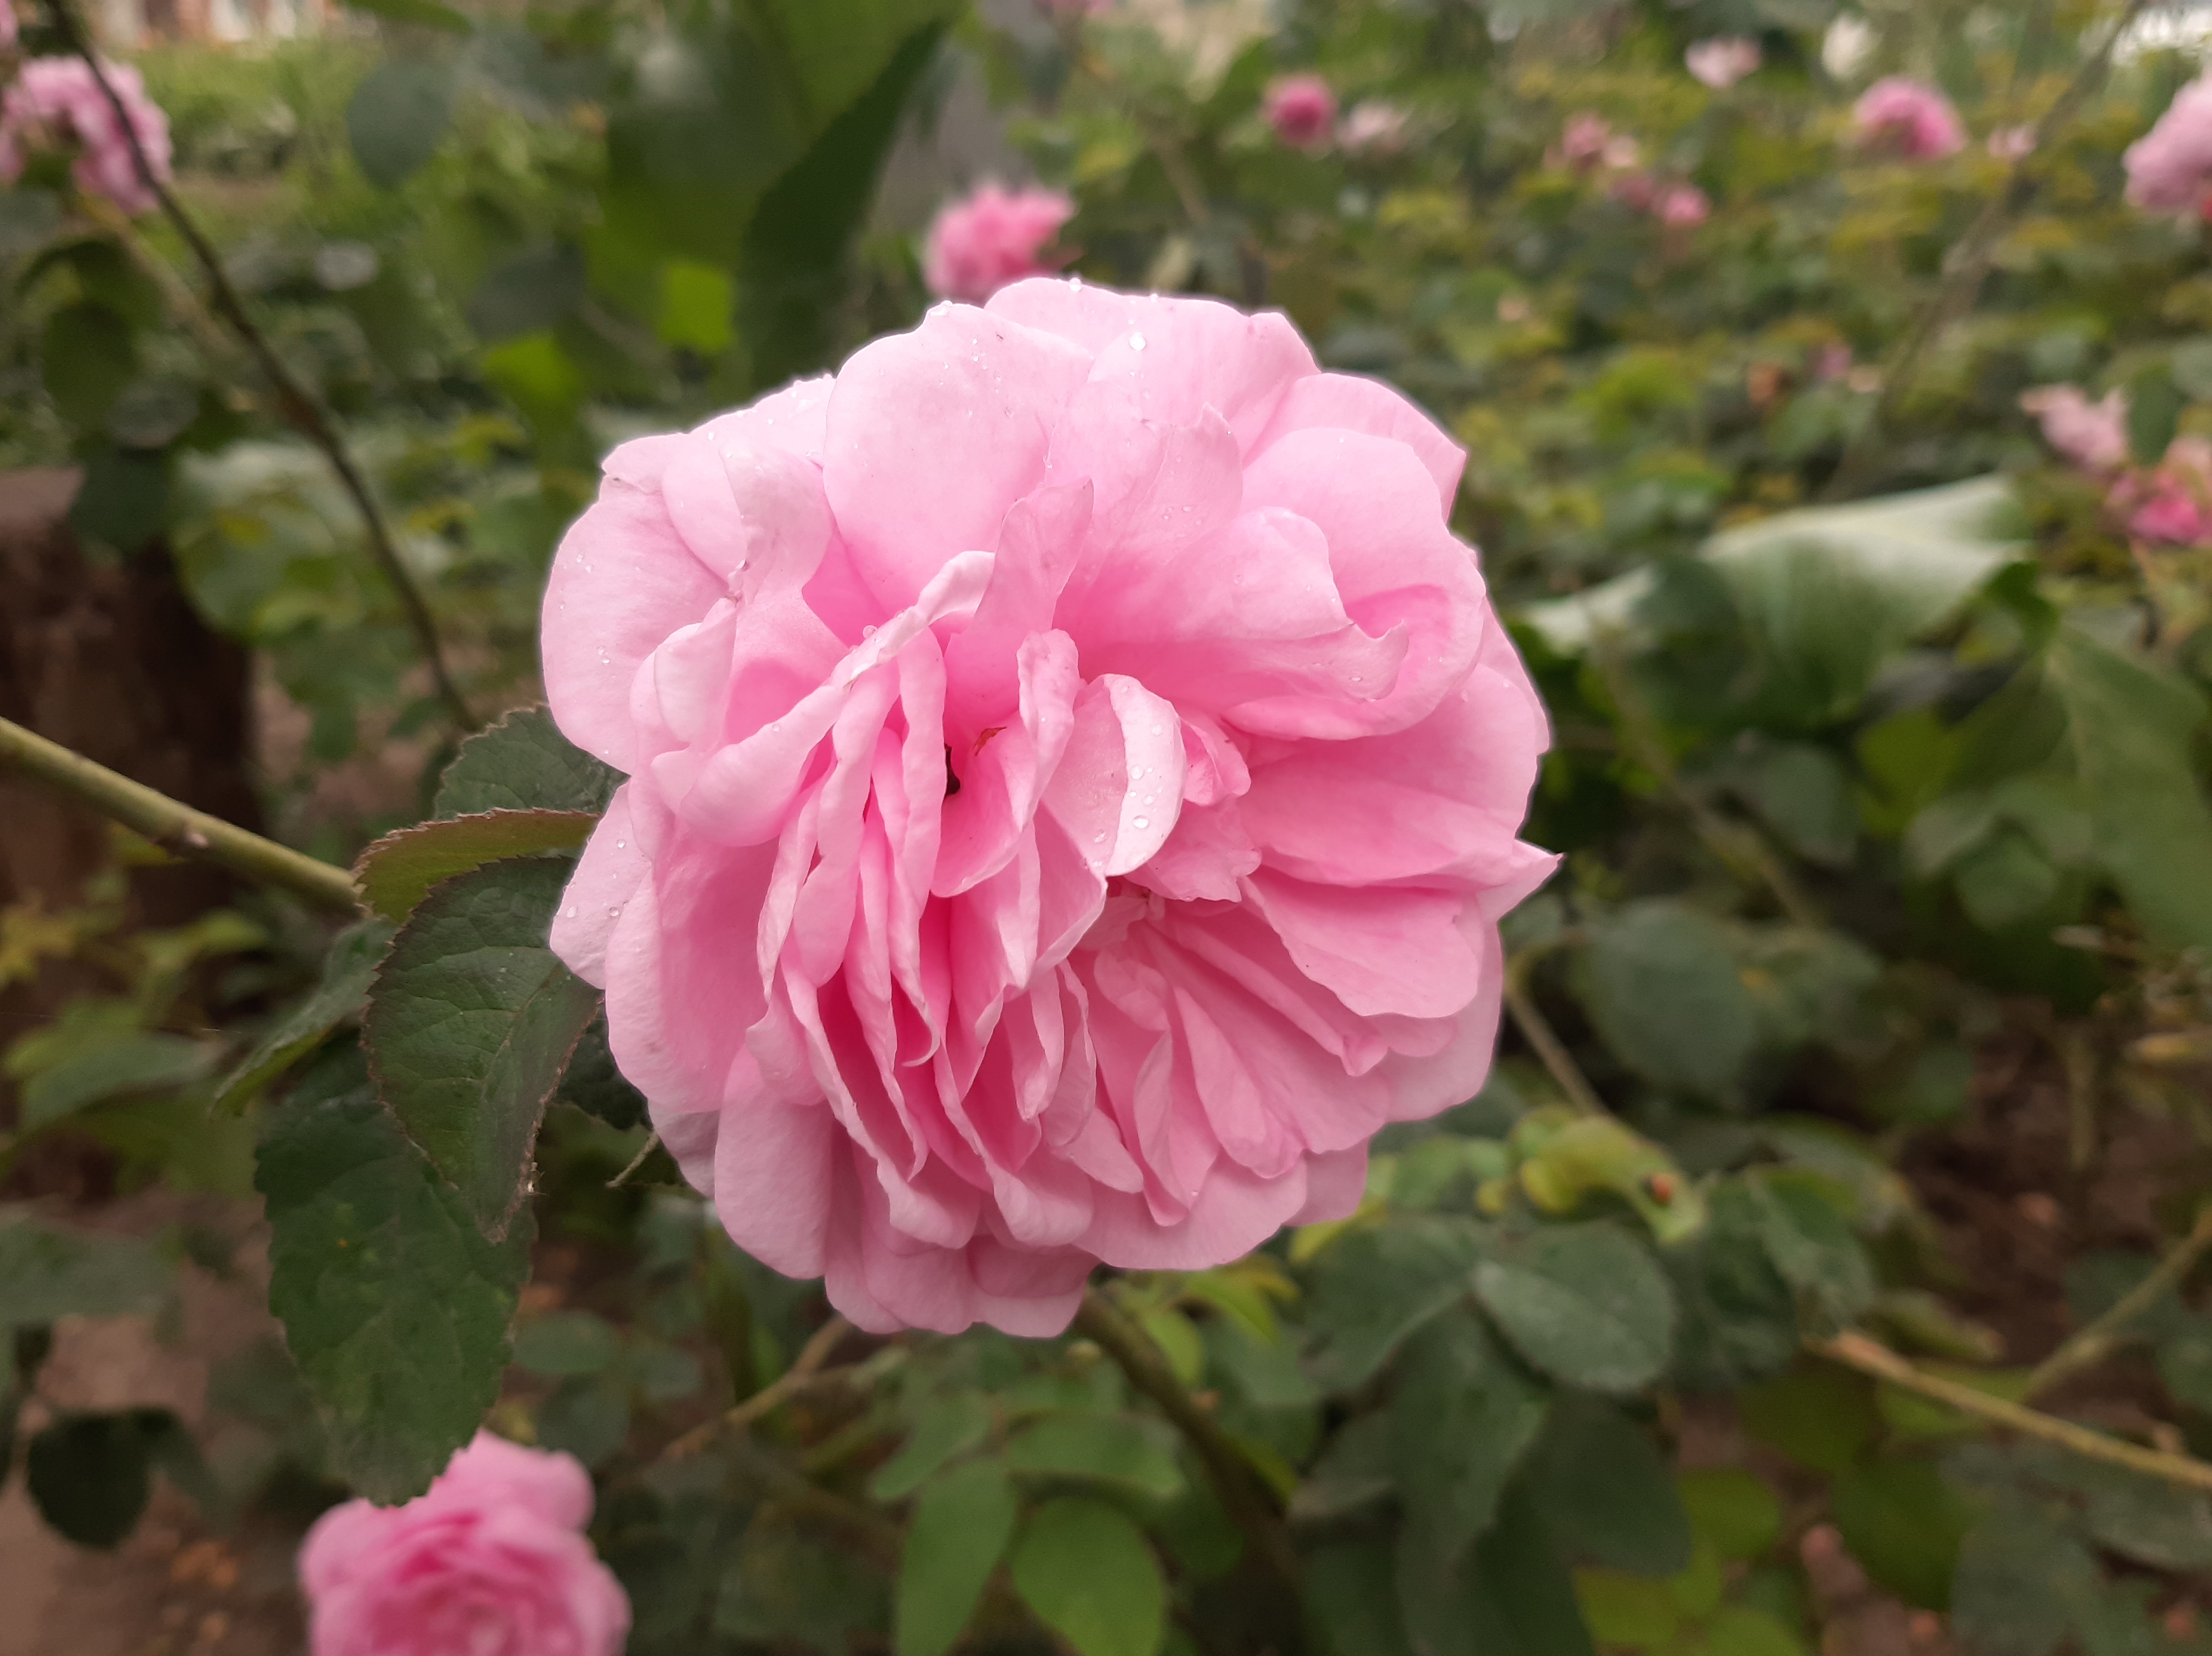 A blossoming rosebud